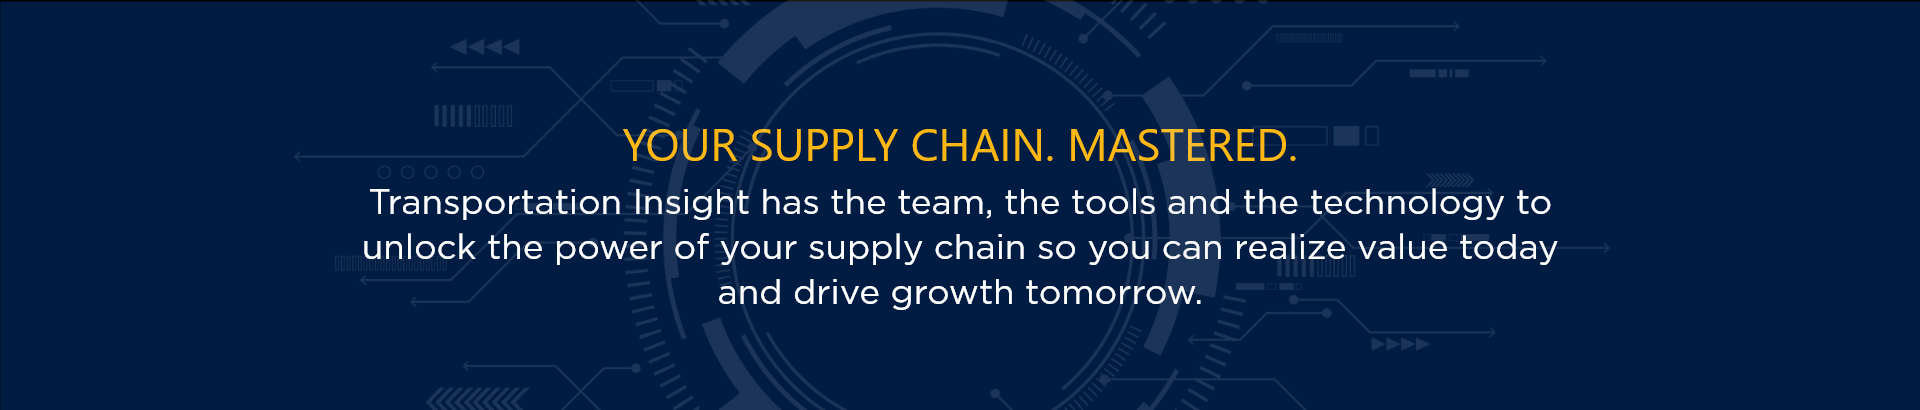 Supply Chain Mastered1